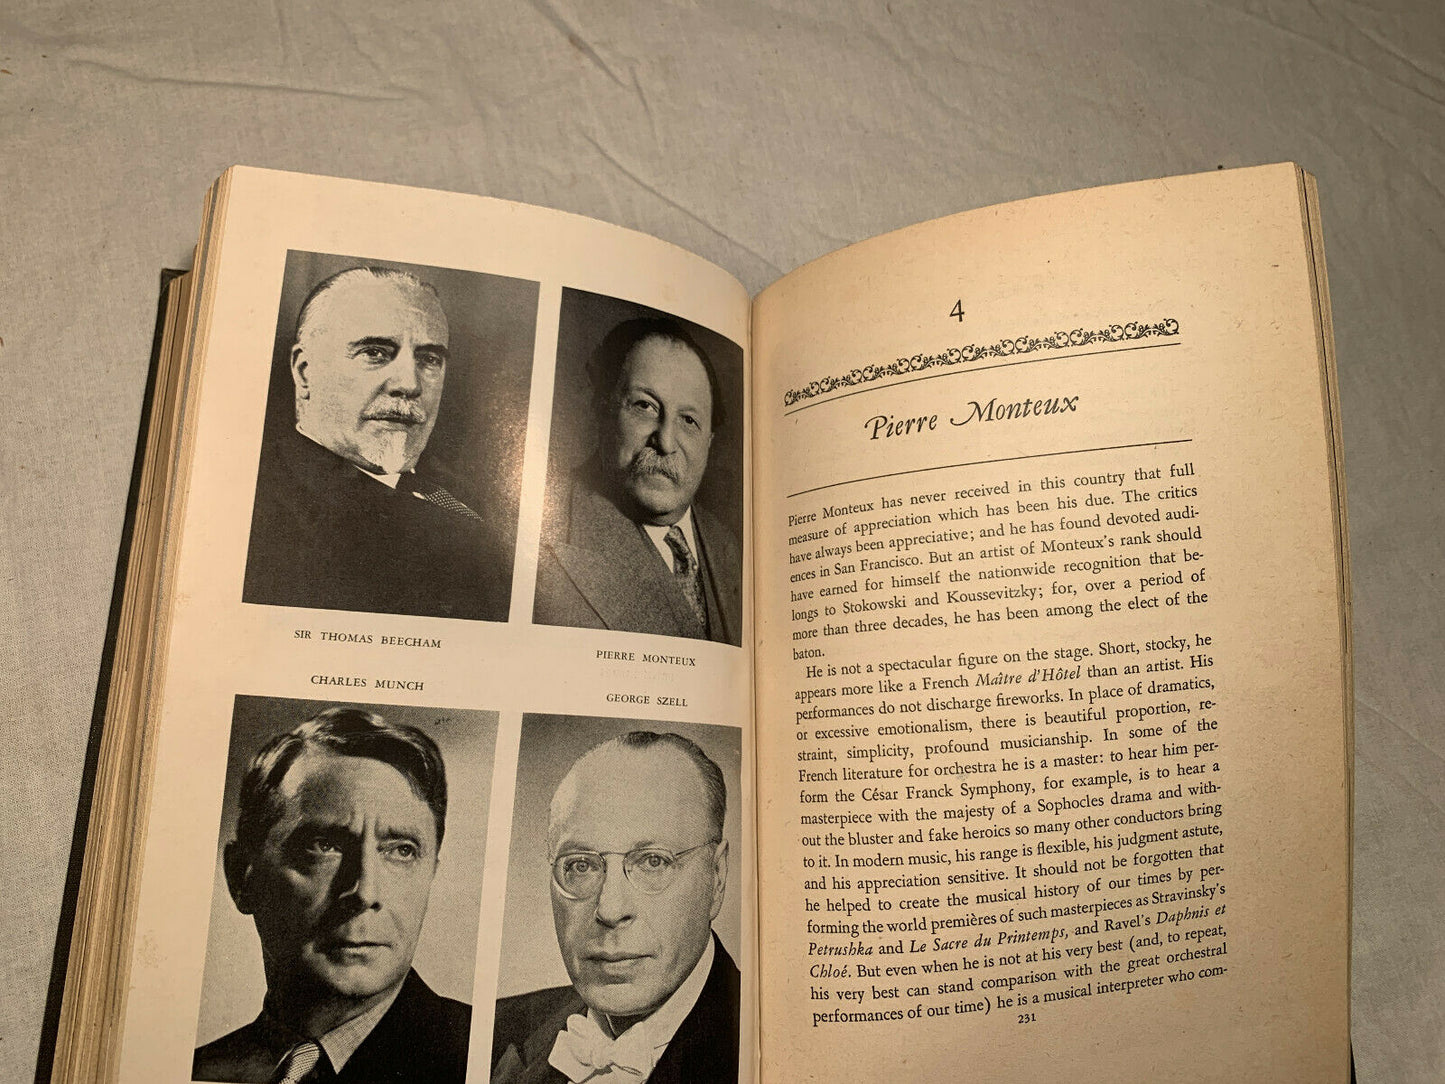 Dictators of the Baton by David Ewen 1948 2nd Ed Hardcover